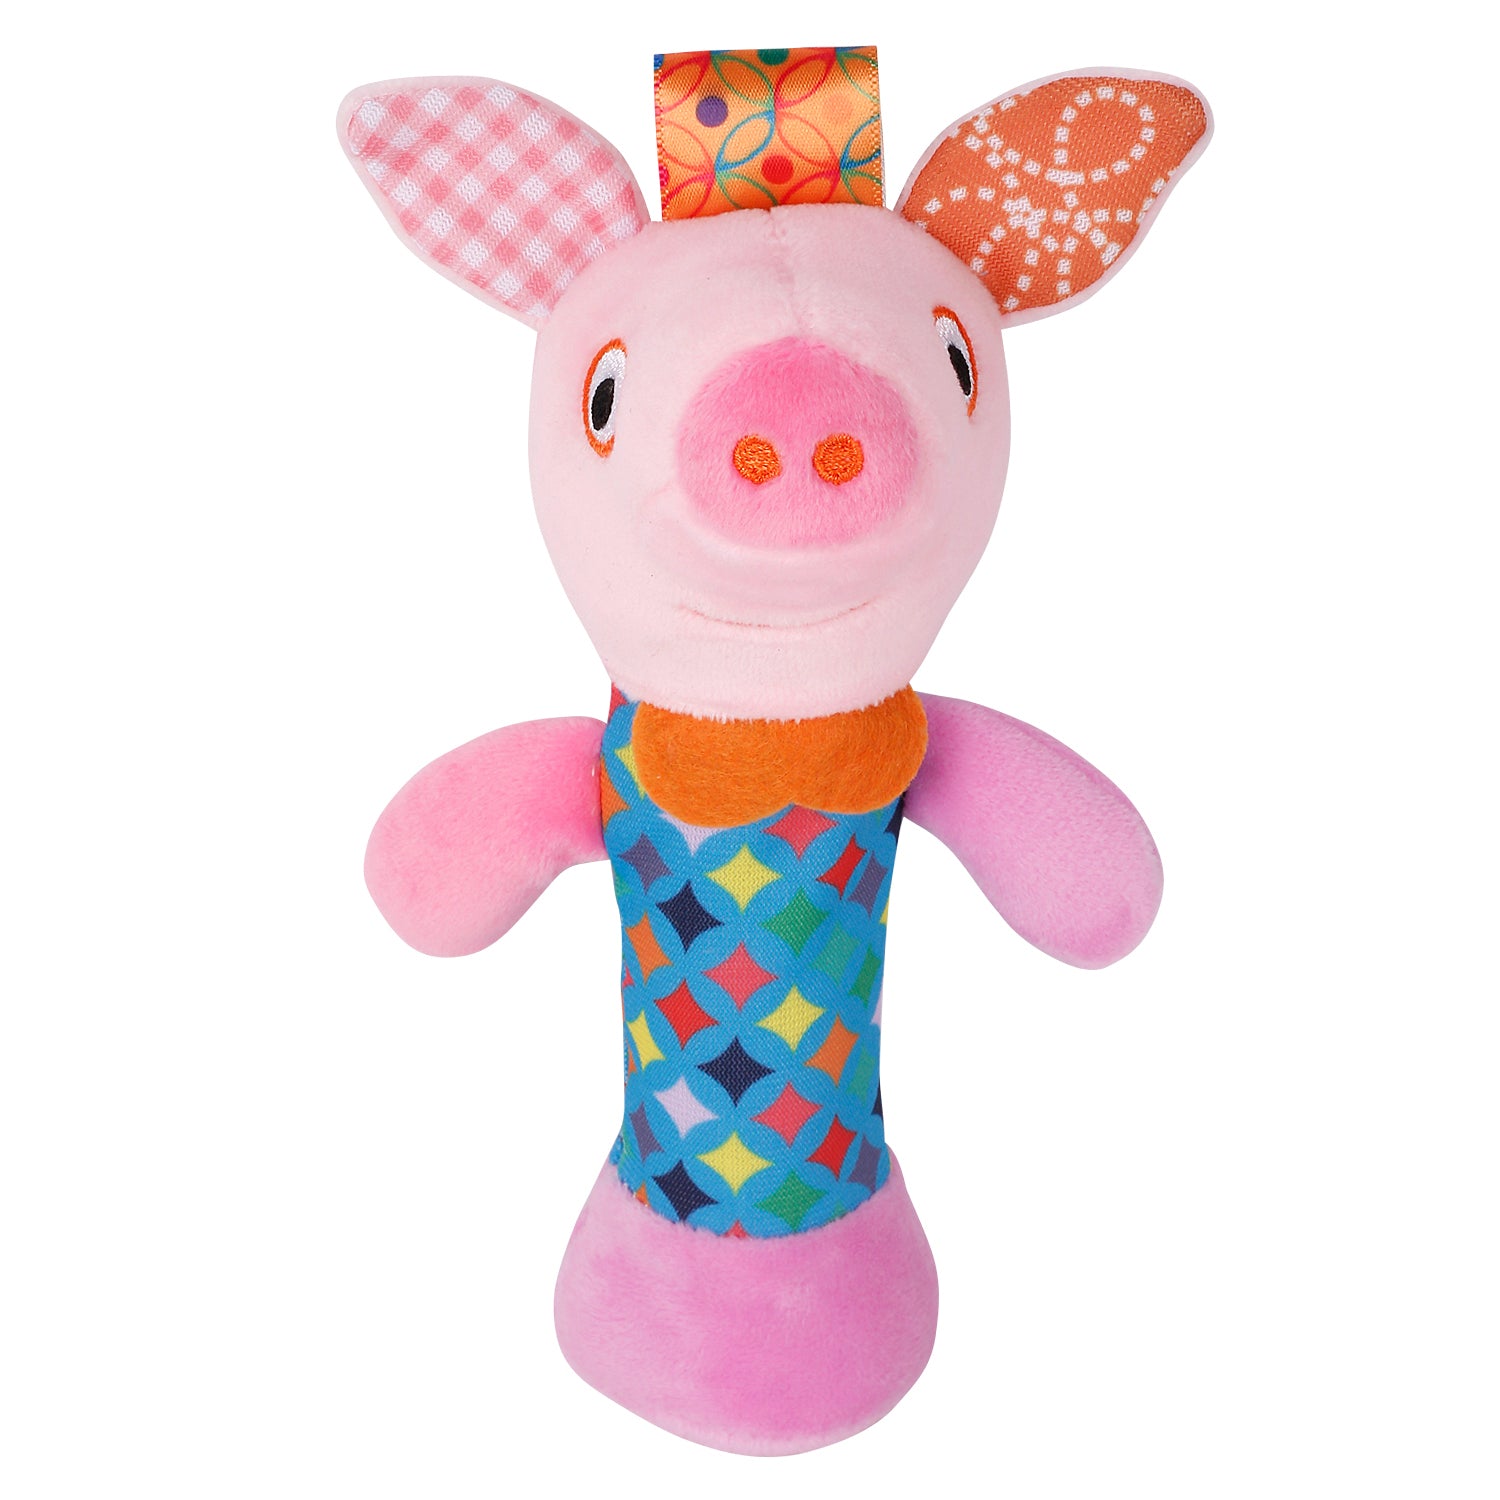 Mr. Piggy Pink Handheld Rattle Toy - Baby Moo